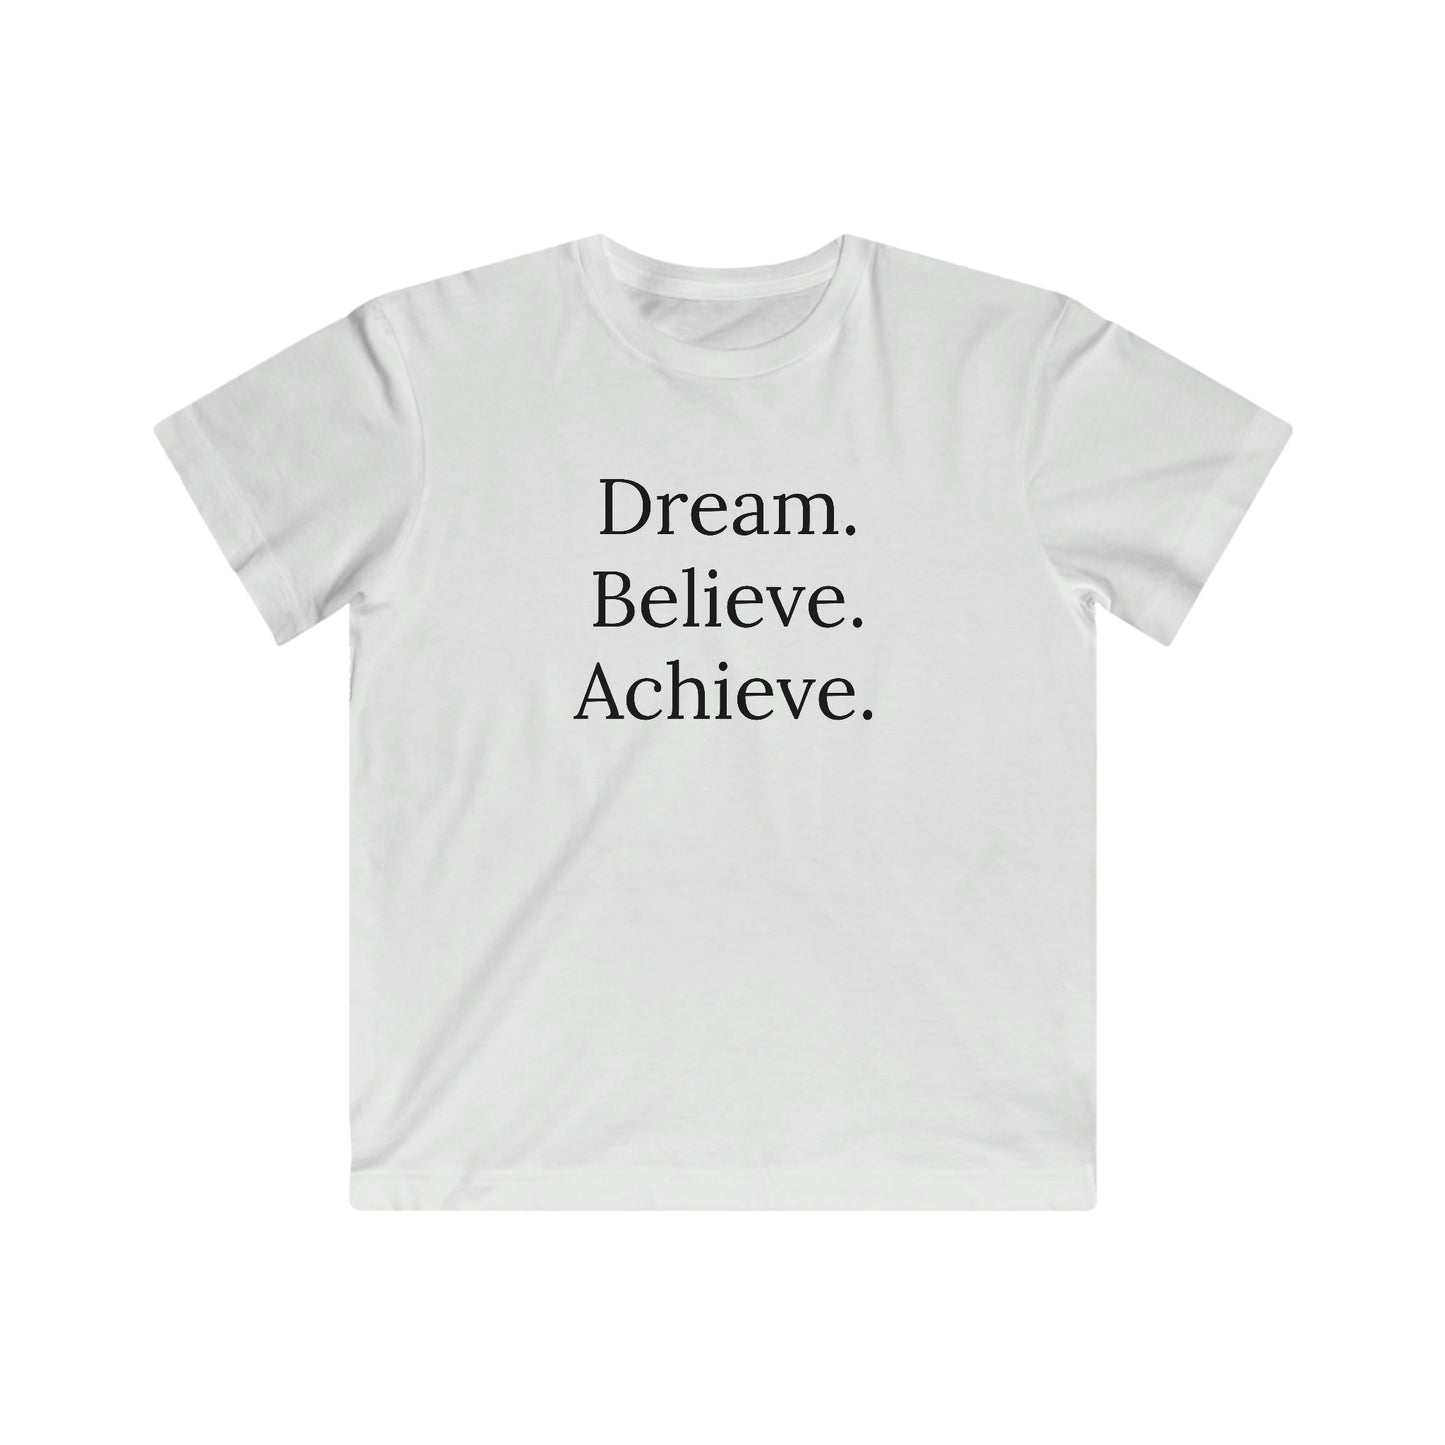 Dream. Believe. Achieve. Kids T-shirt